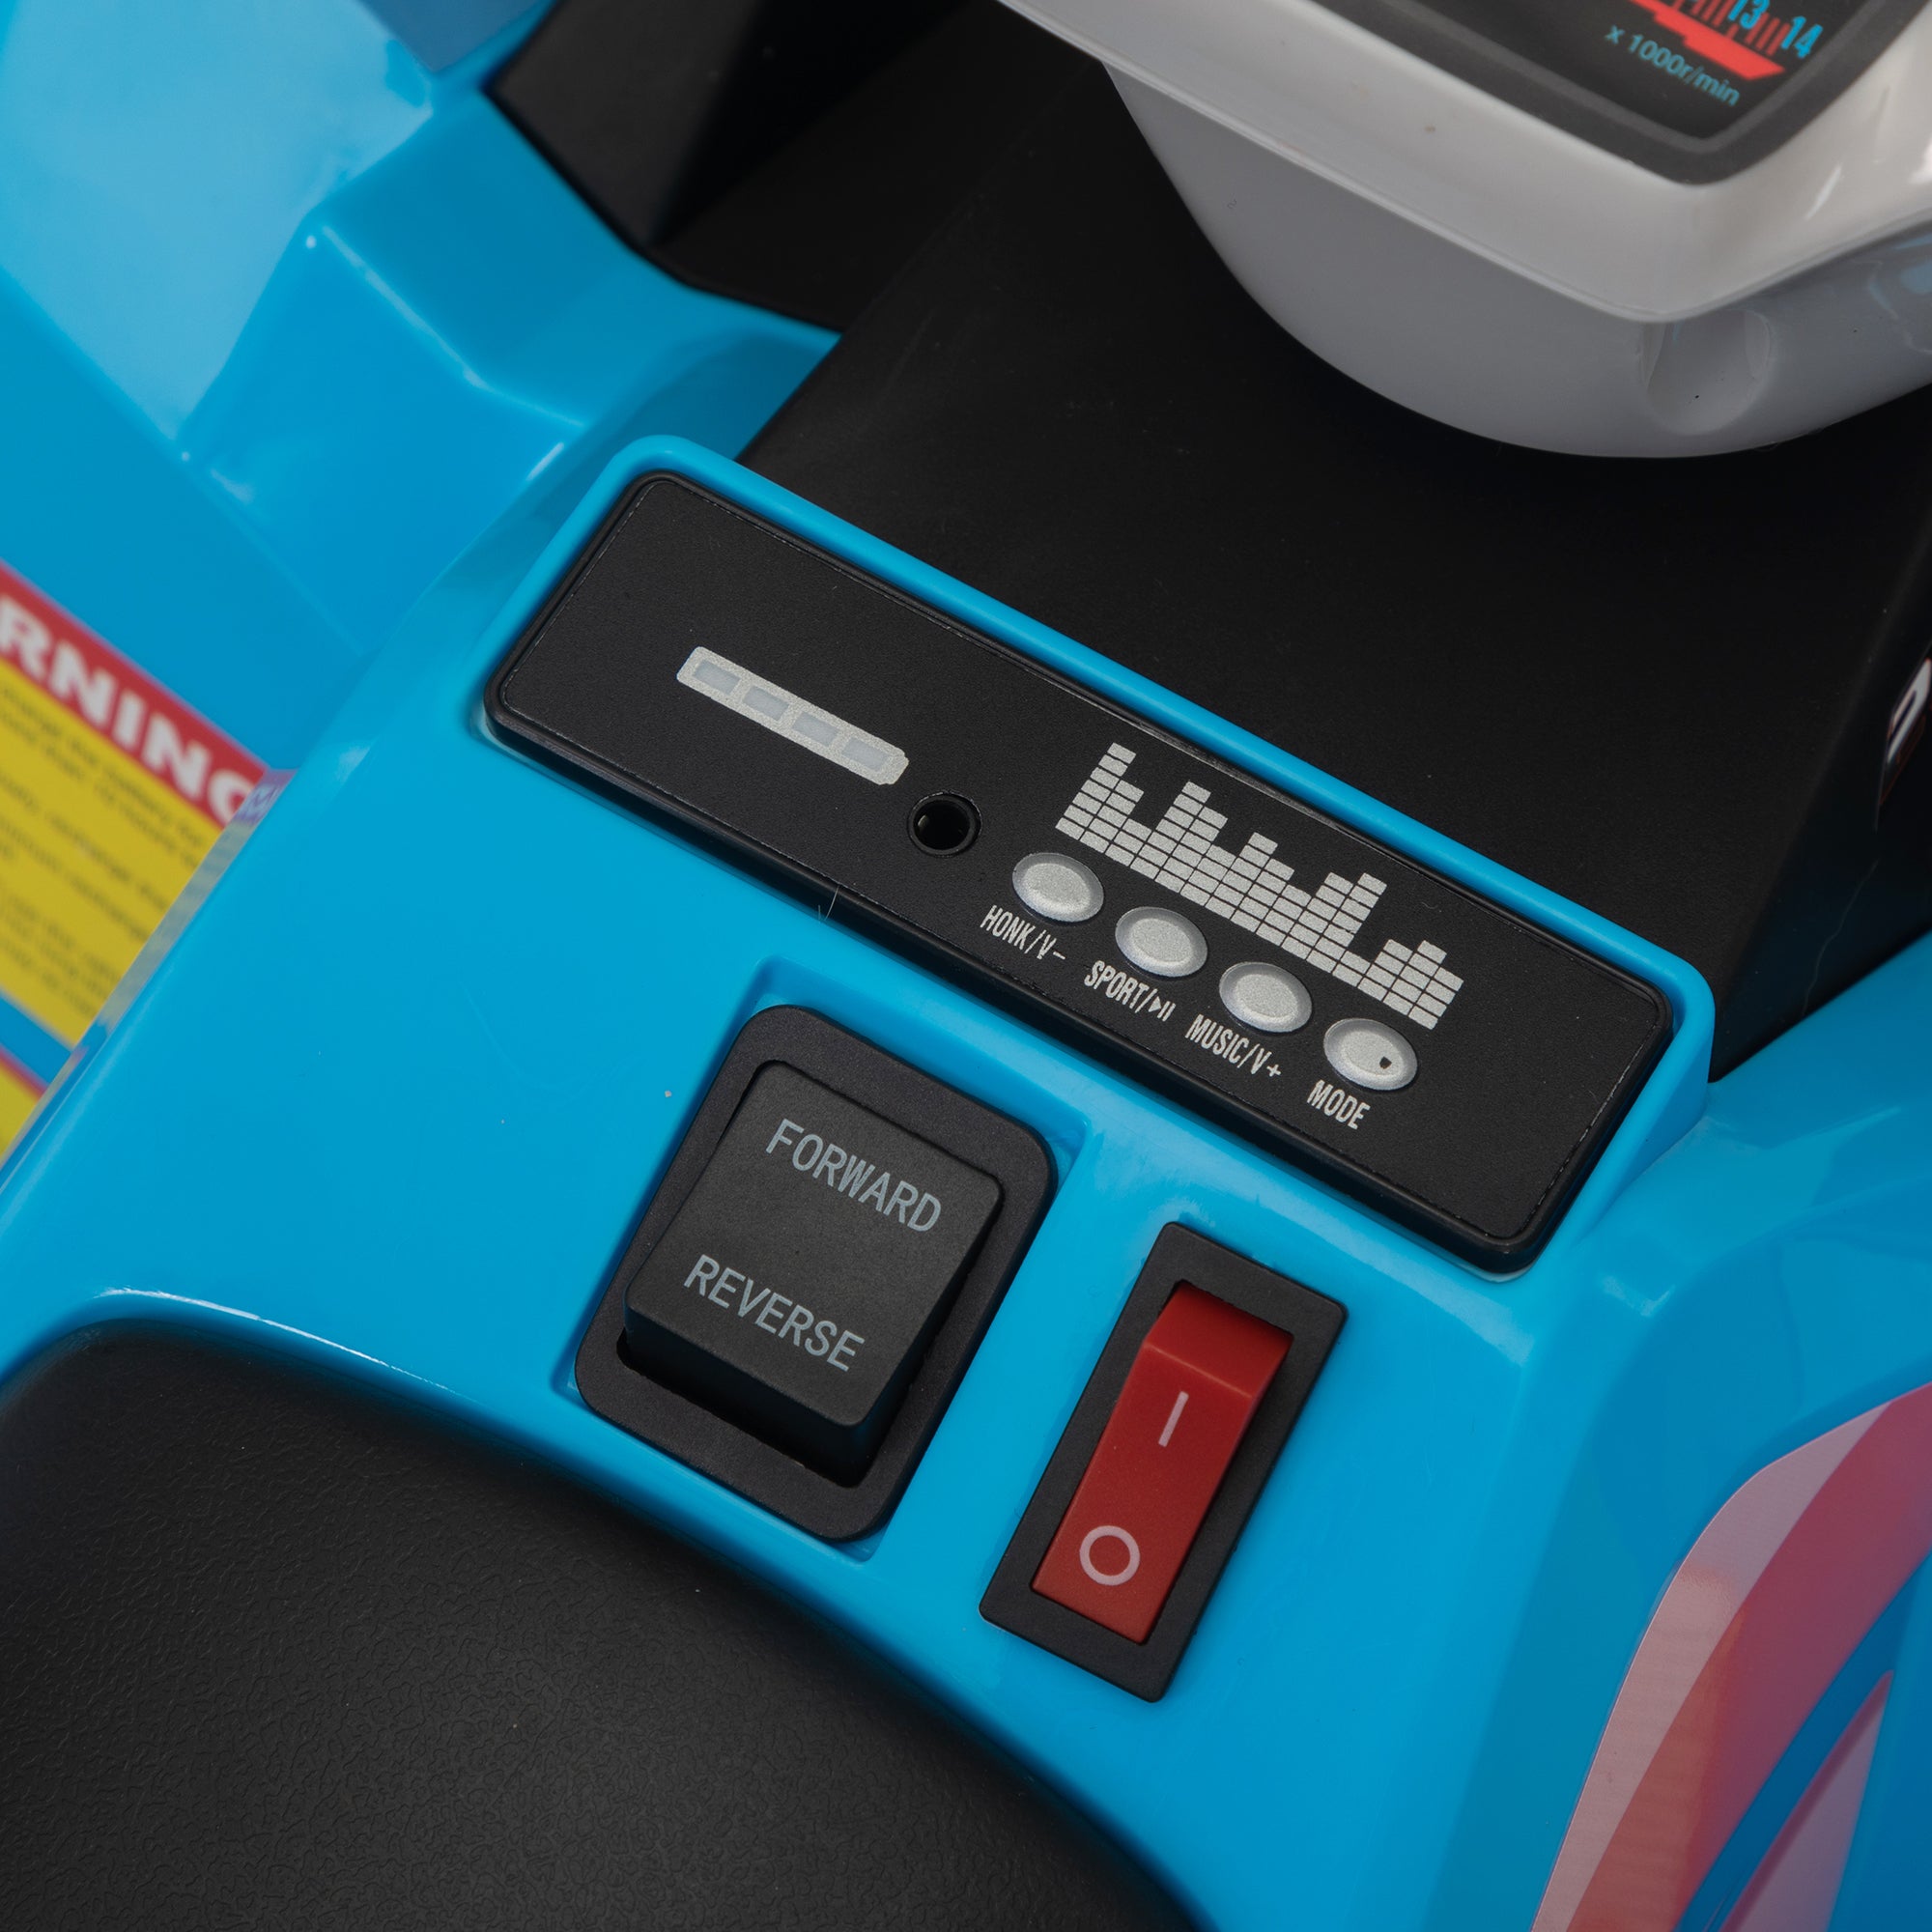 6V Kids Electric ATV, Toddler Ride on Car with blue-polypropylene